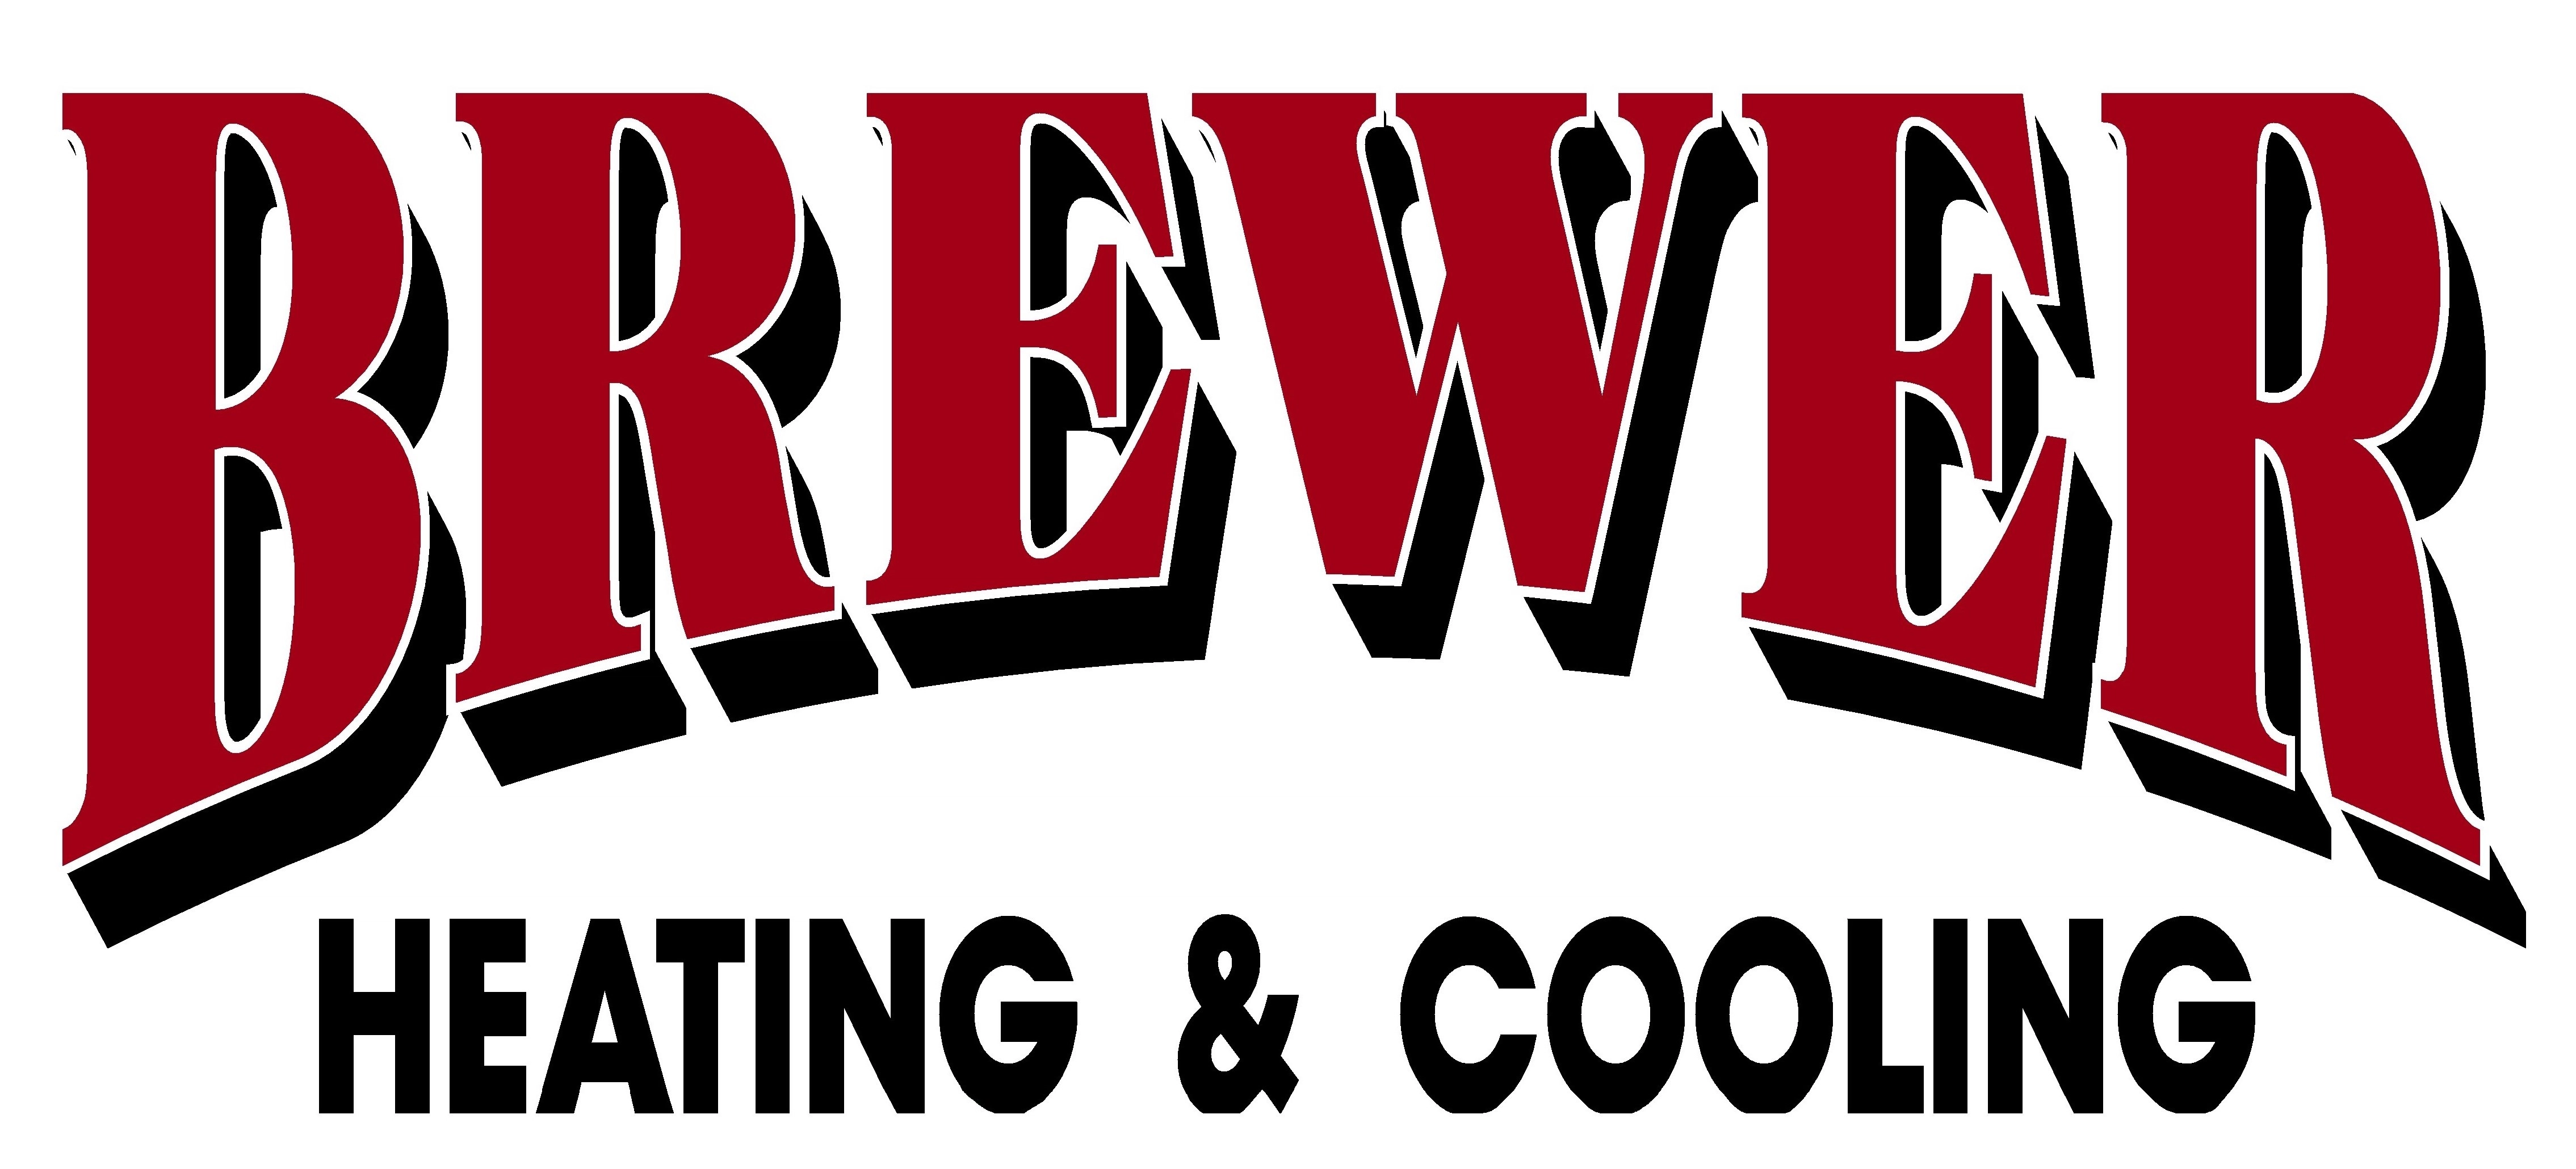 Brewer Heating, Inc Logo